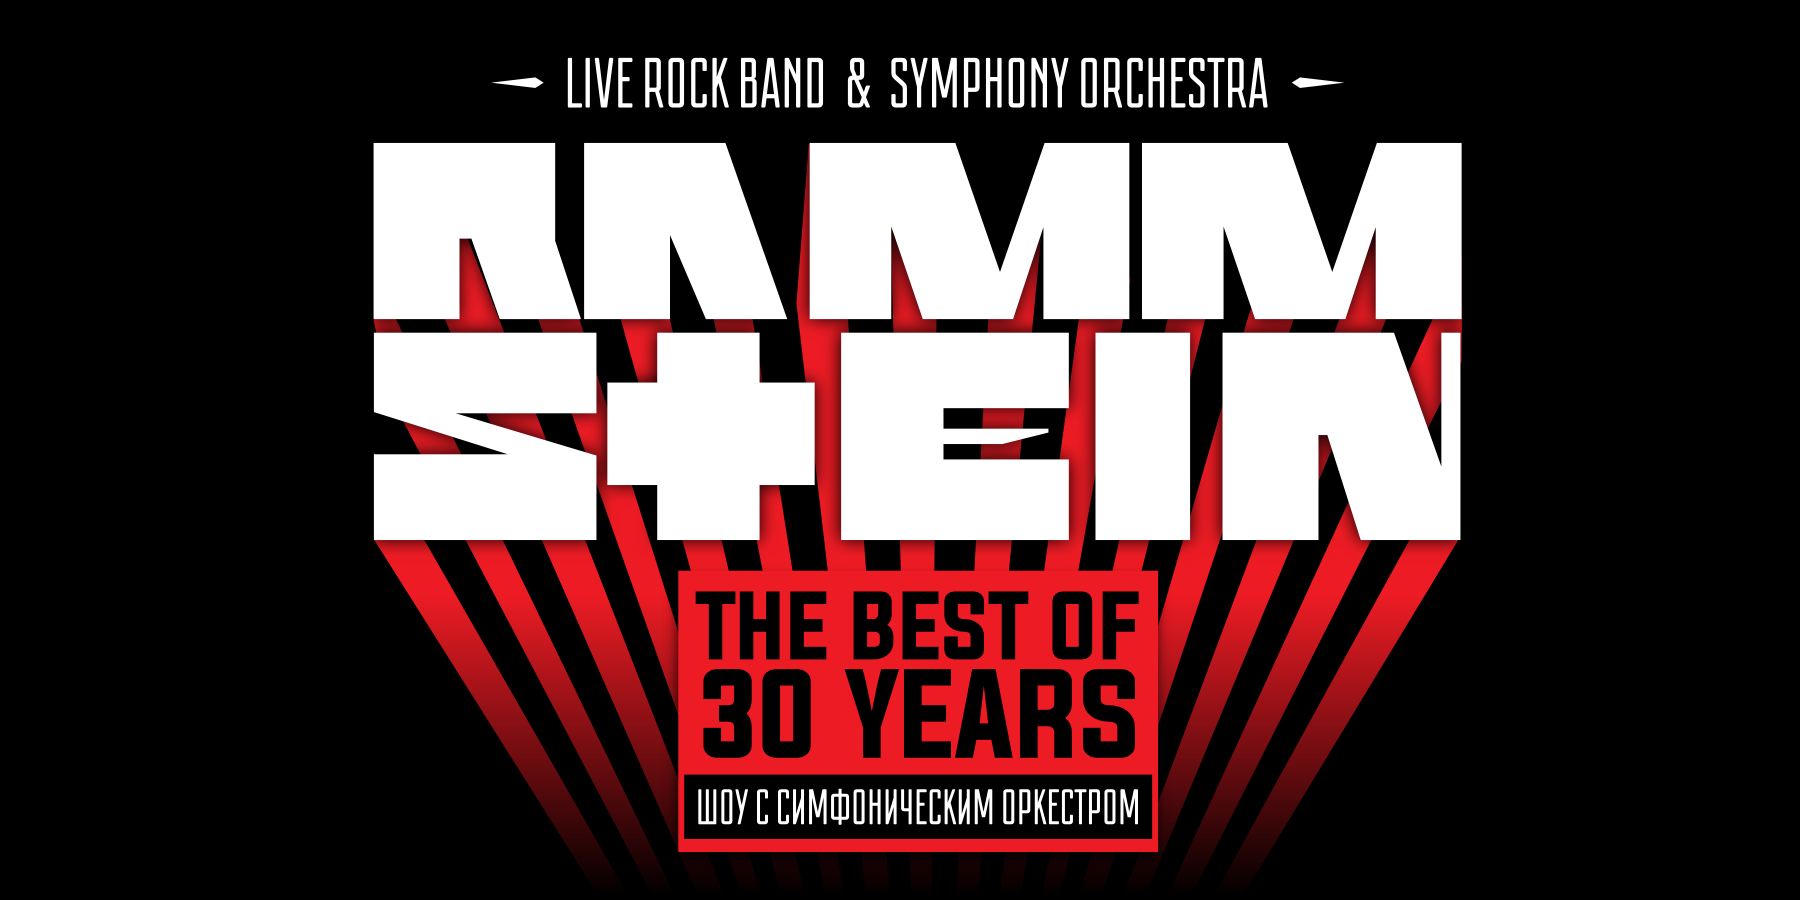 Tribute Rammstein с симфоническим оркестром. The Best of 30 years 24